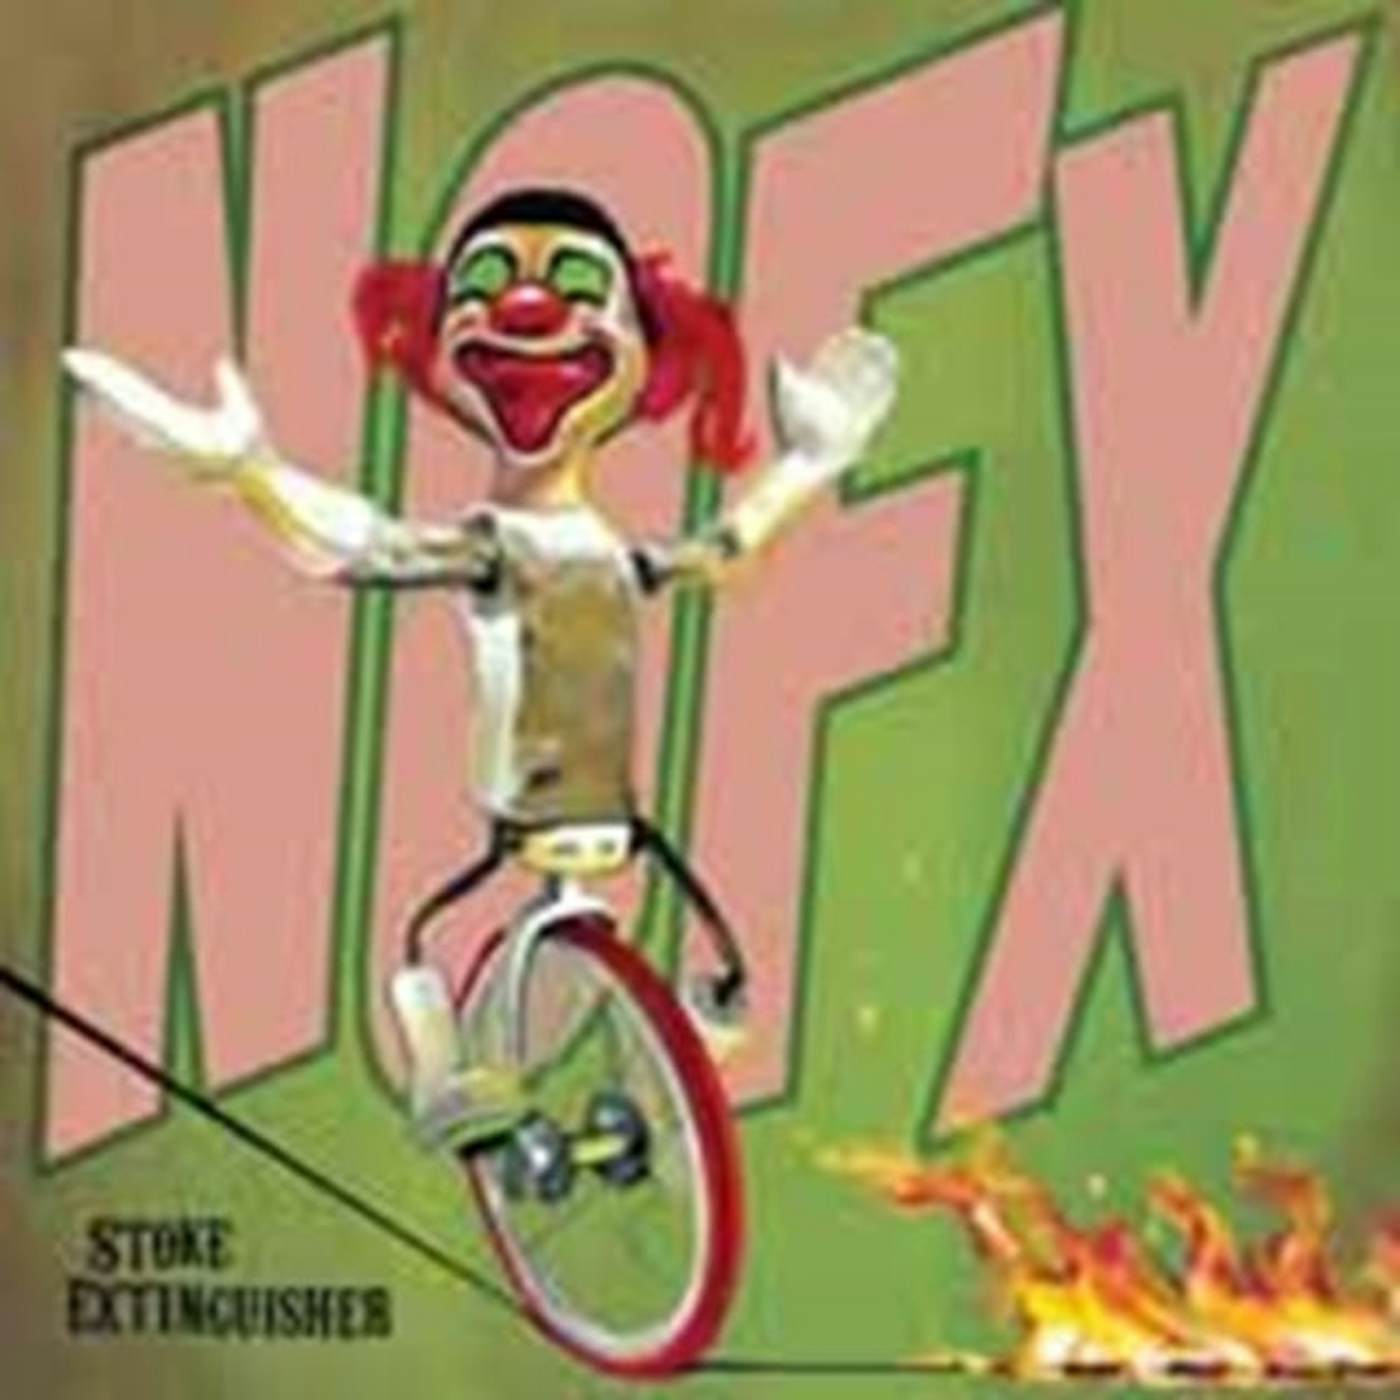 NOFX CD - Stoke Extinguisher